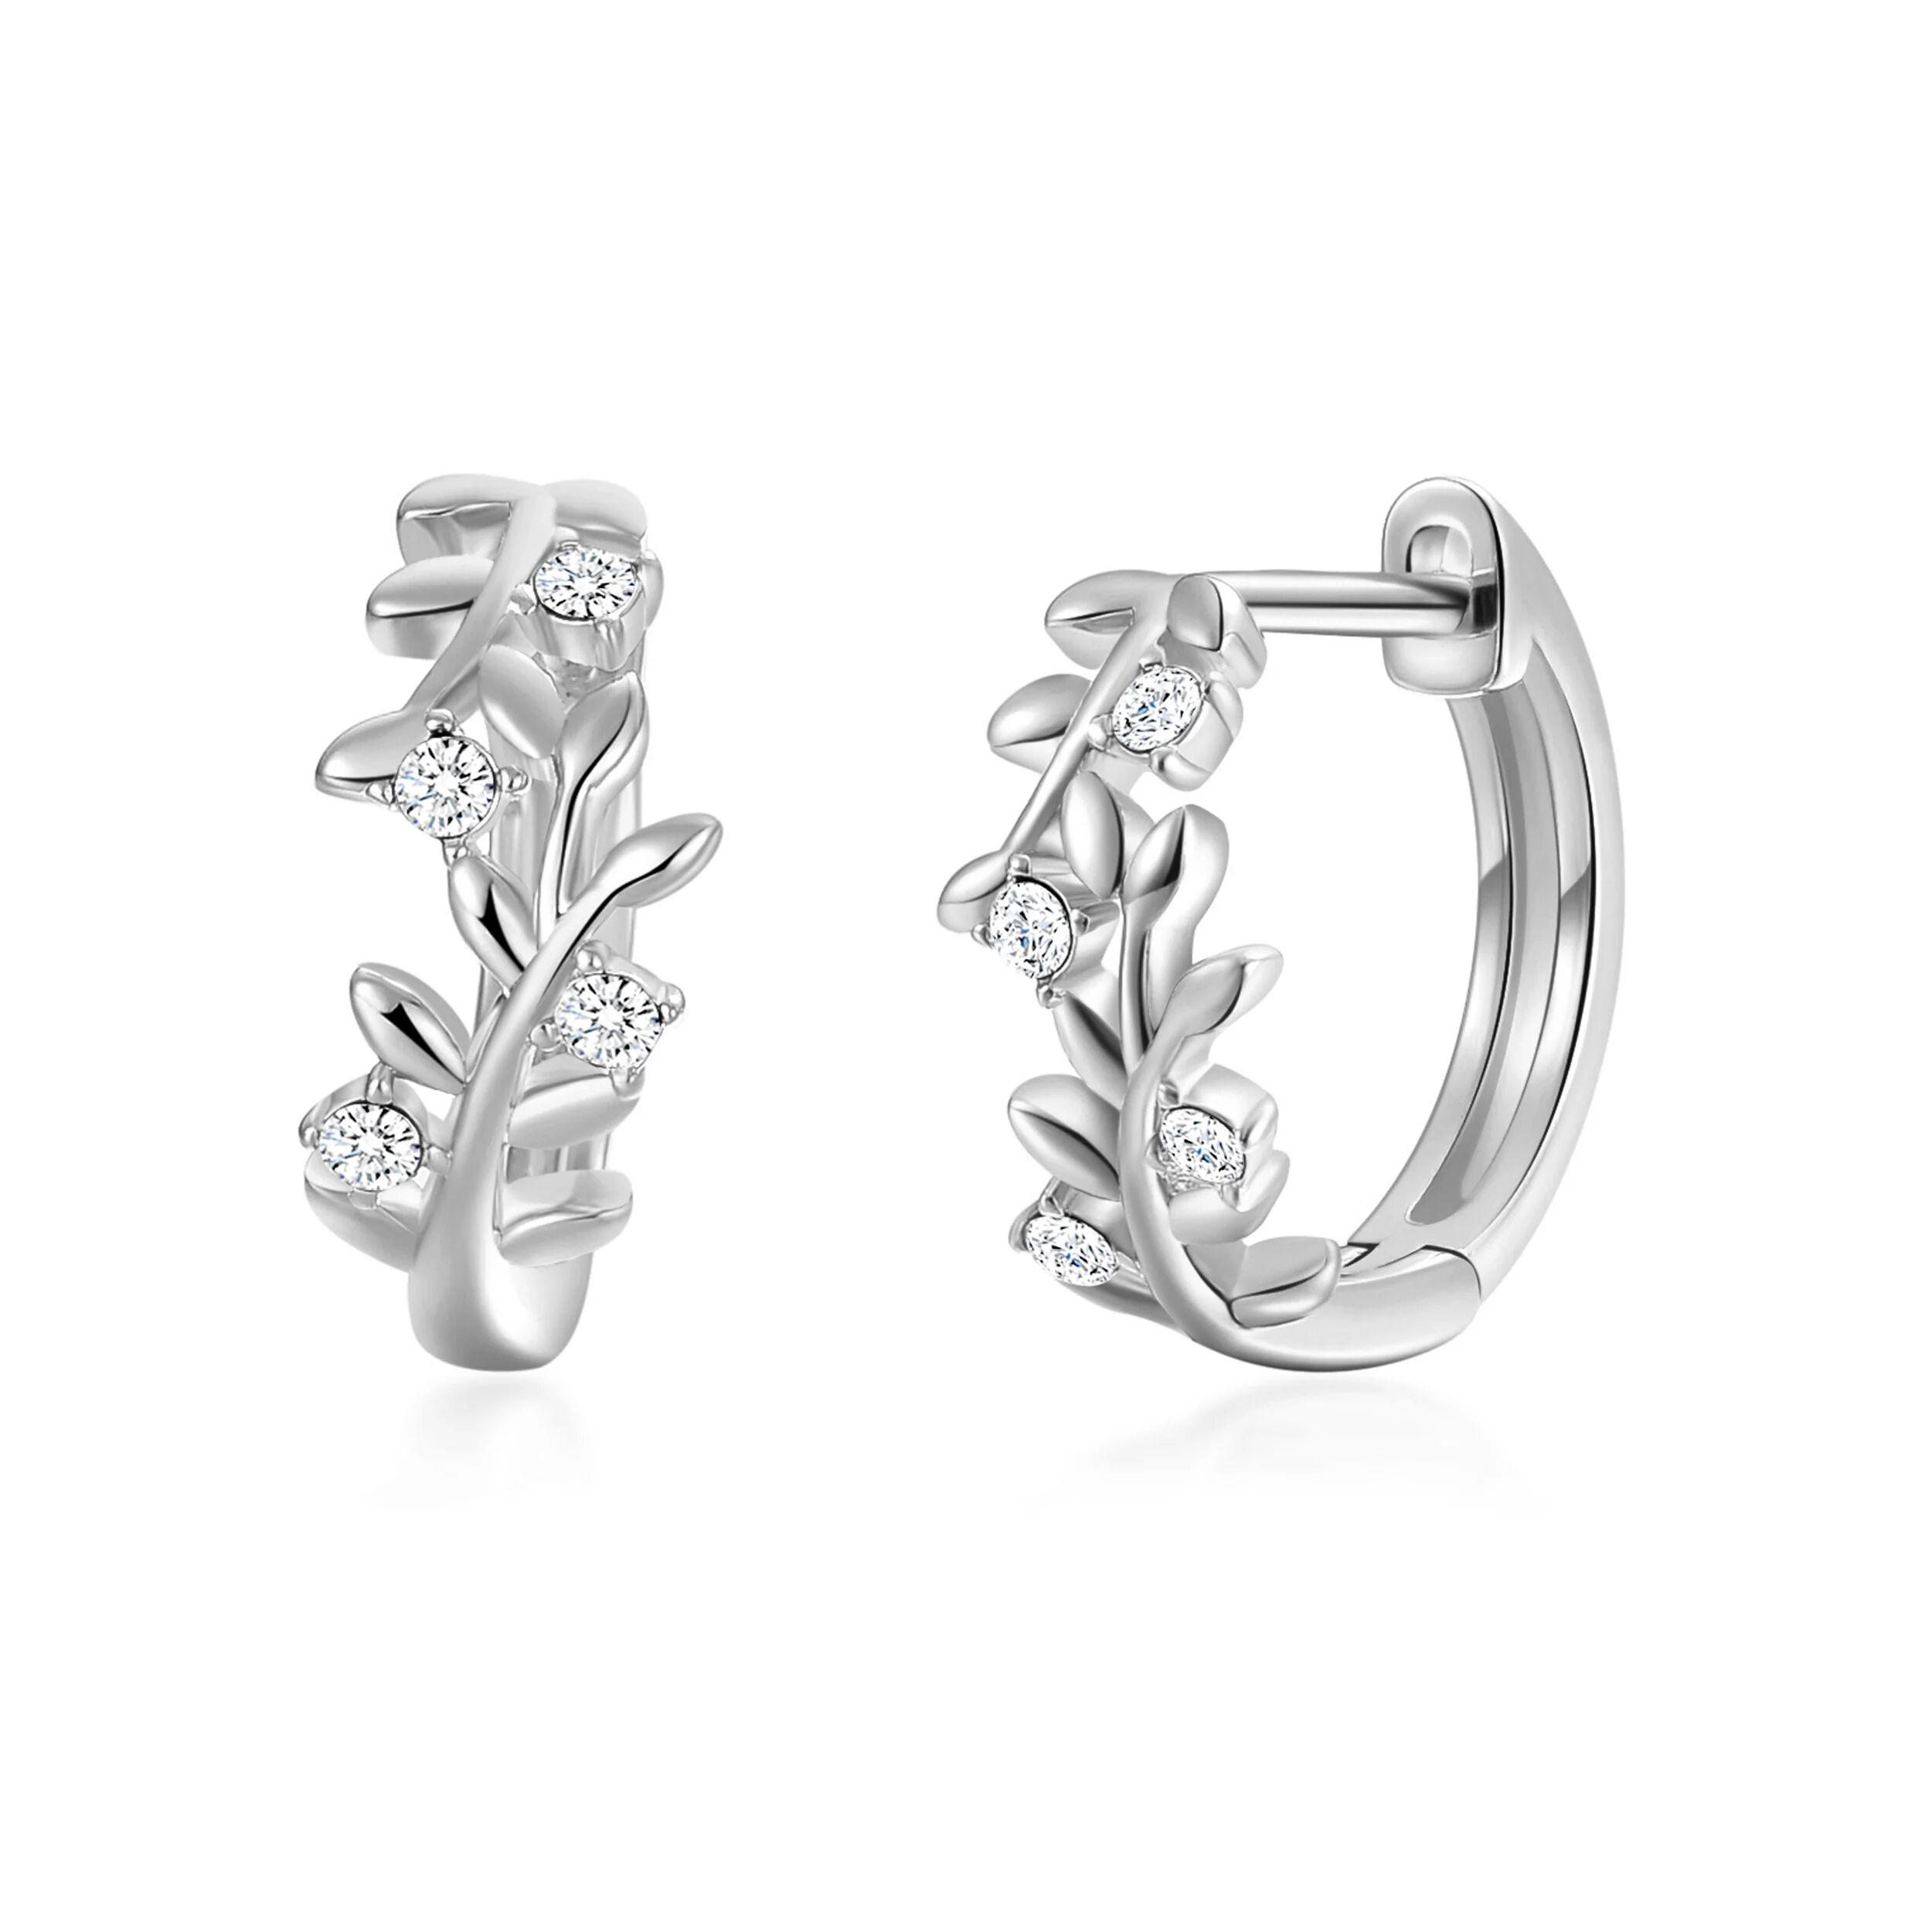 Philip Jones Jewellery Silver Plated Leaf Hoop Earrings Created with Zircondia® Crystals